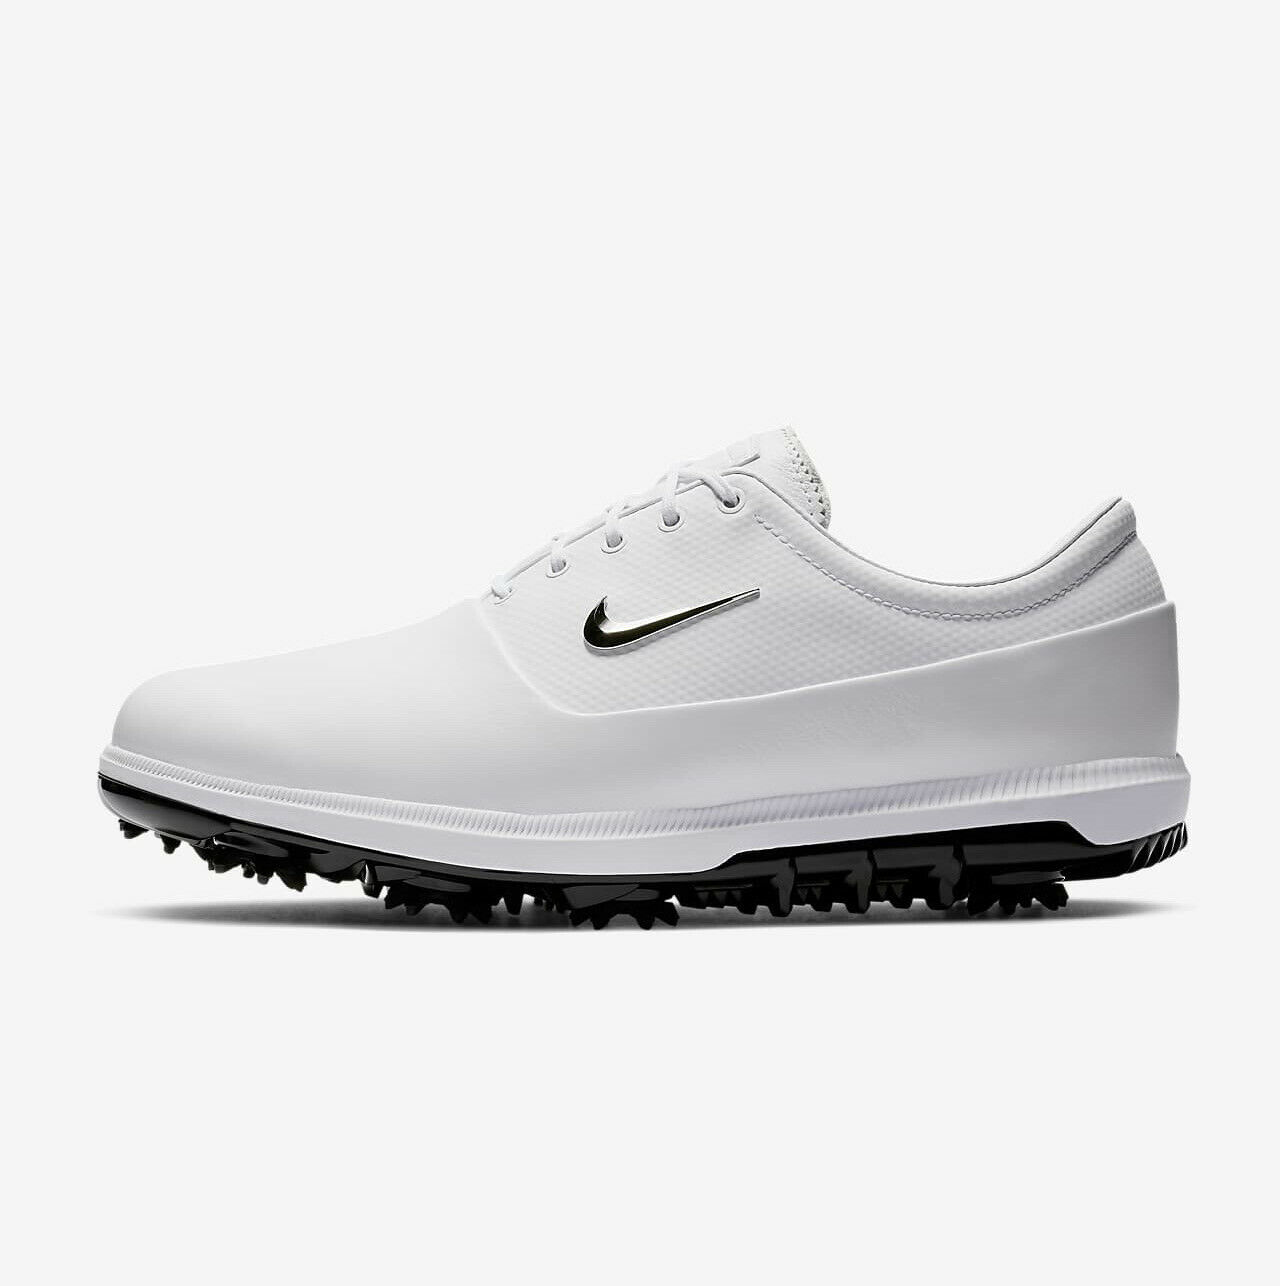 Nike Air Zoom Victory Tour Elite (Men’s Size 8) Golf Shoes cleats White Black